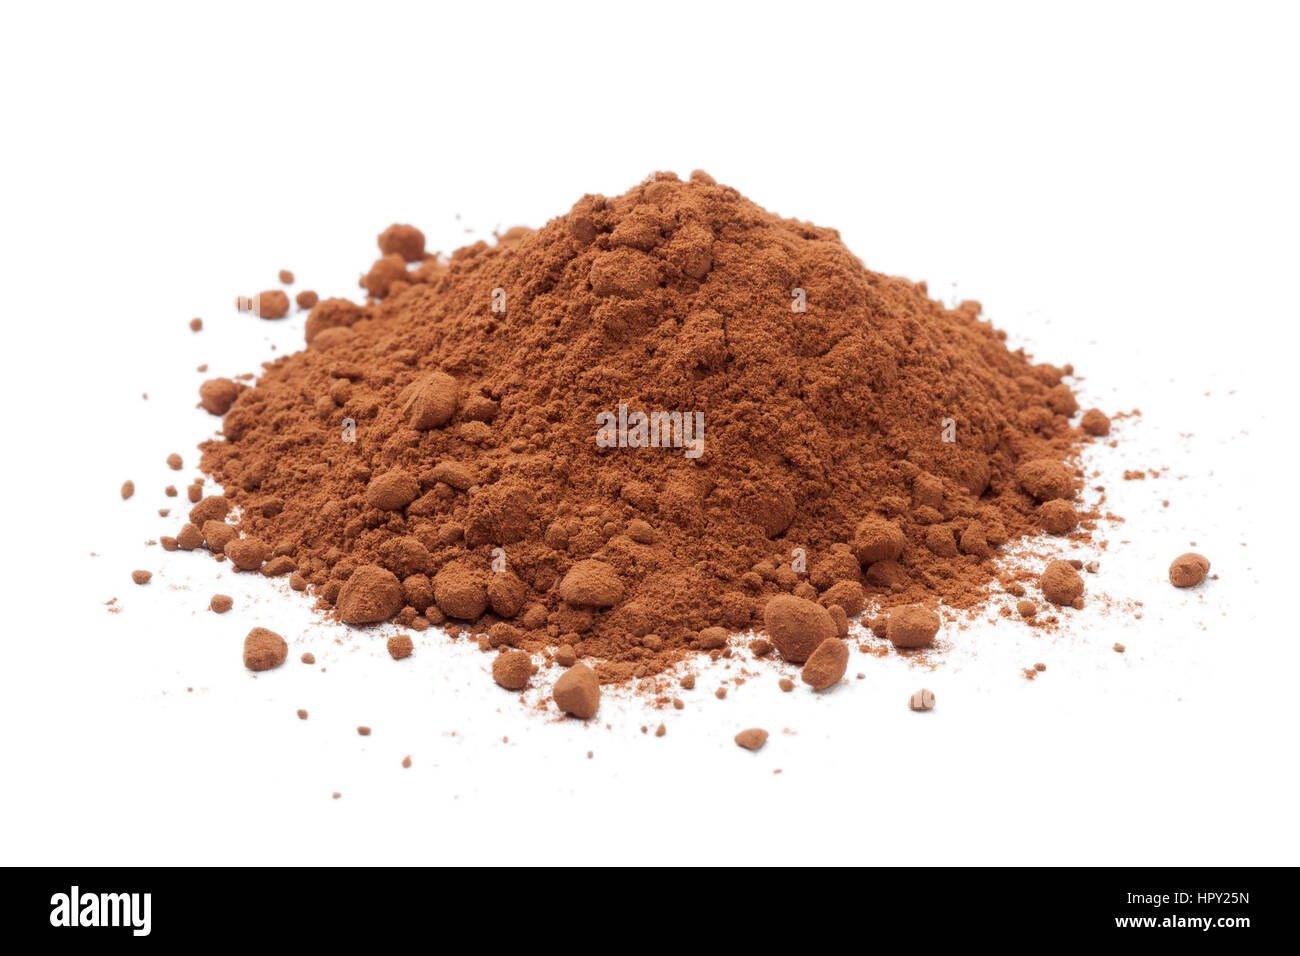 Heap of cocoa powder on white background Stock Photo